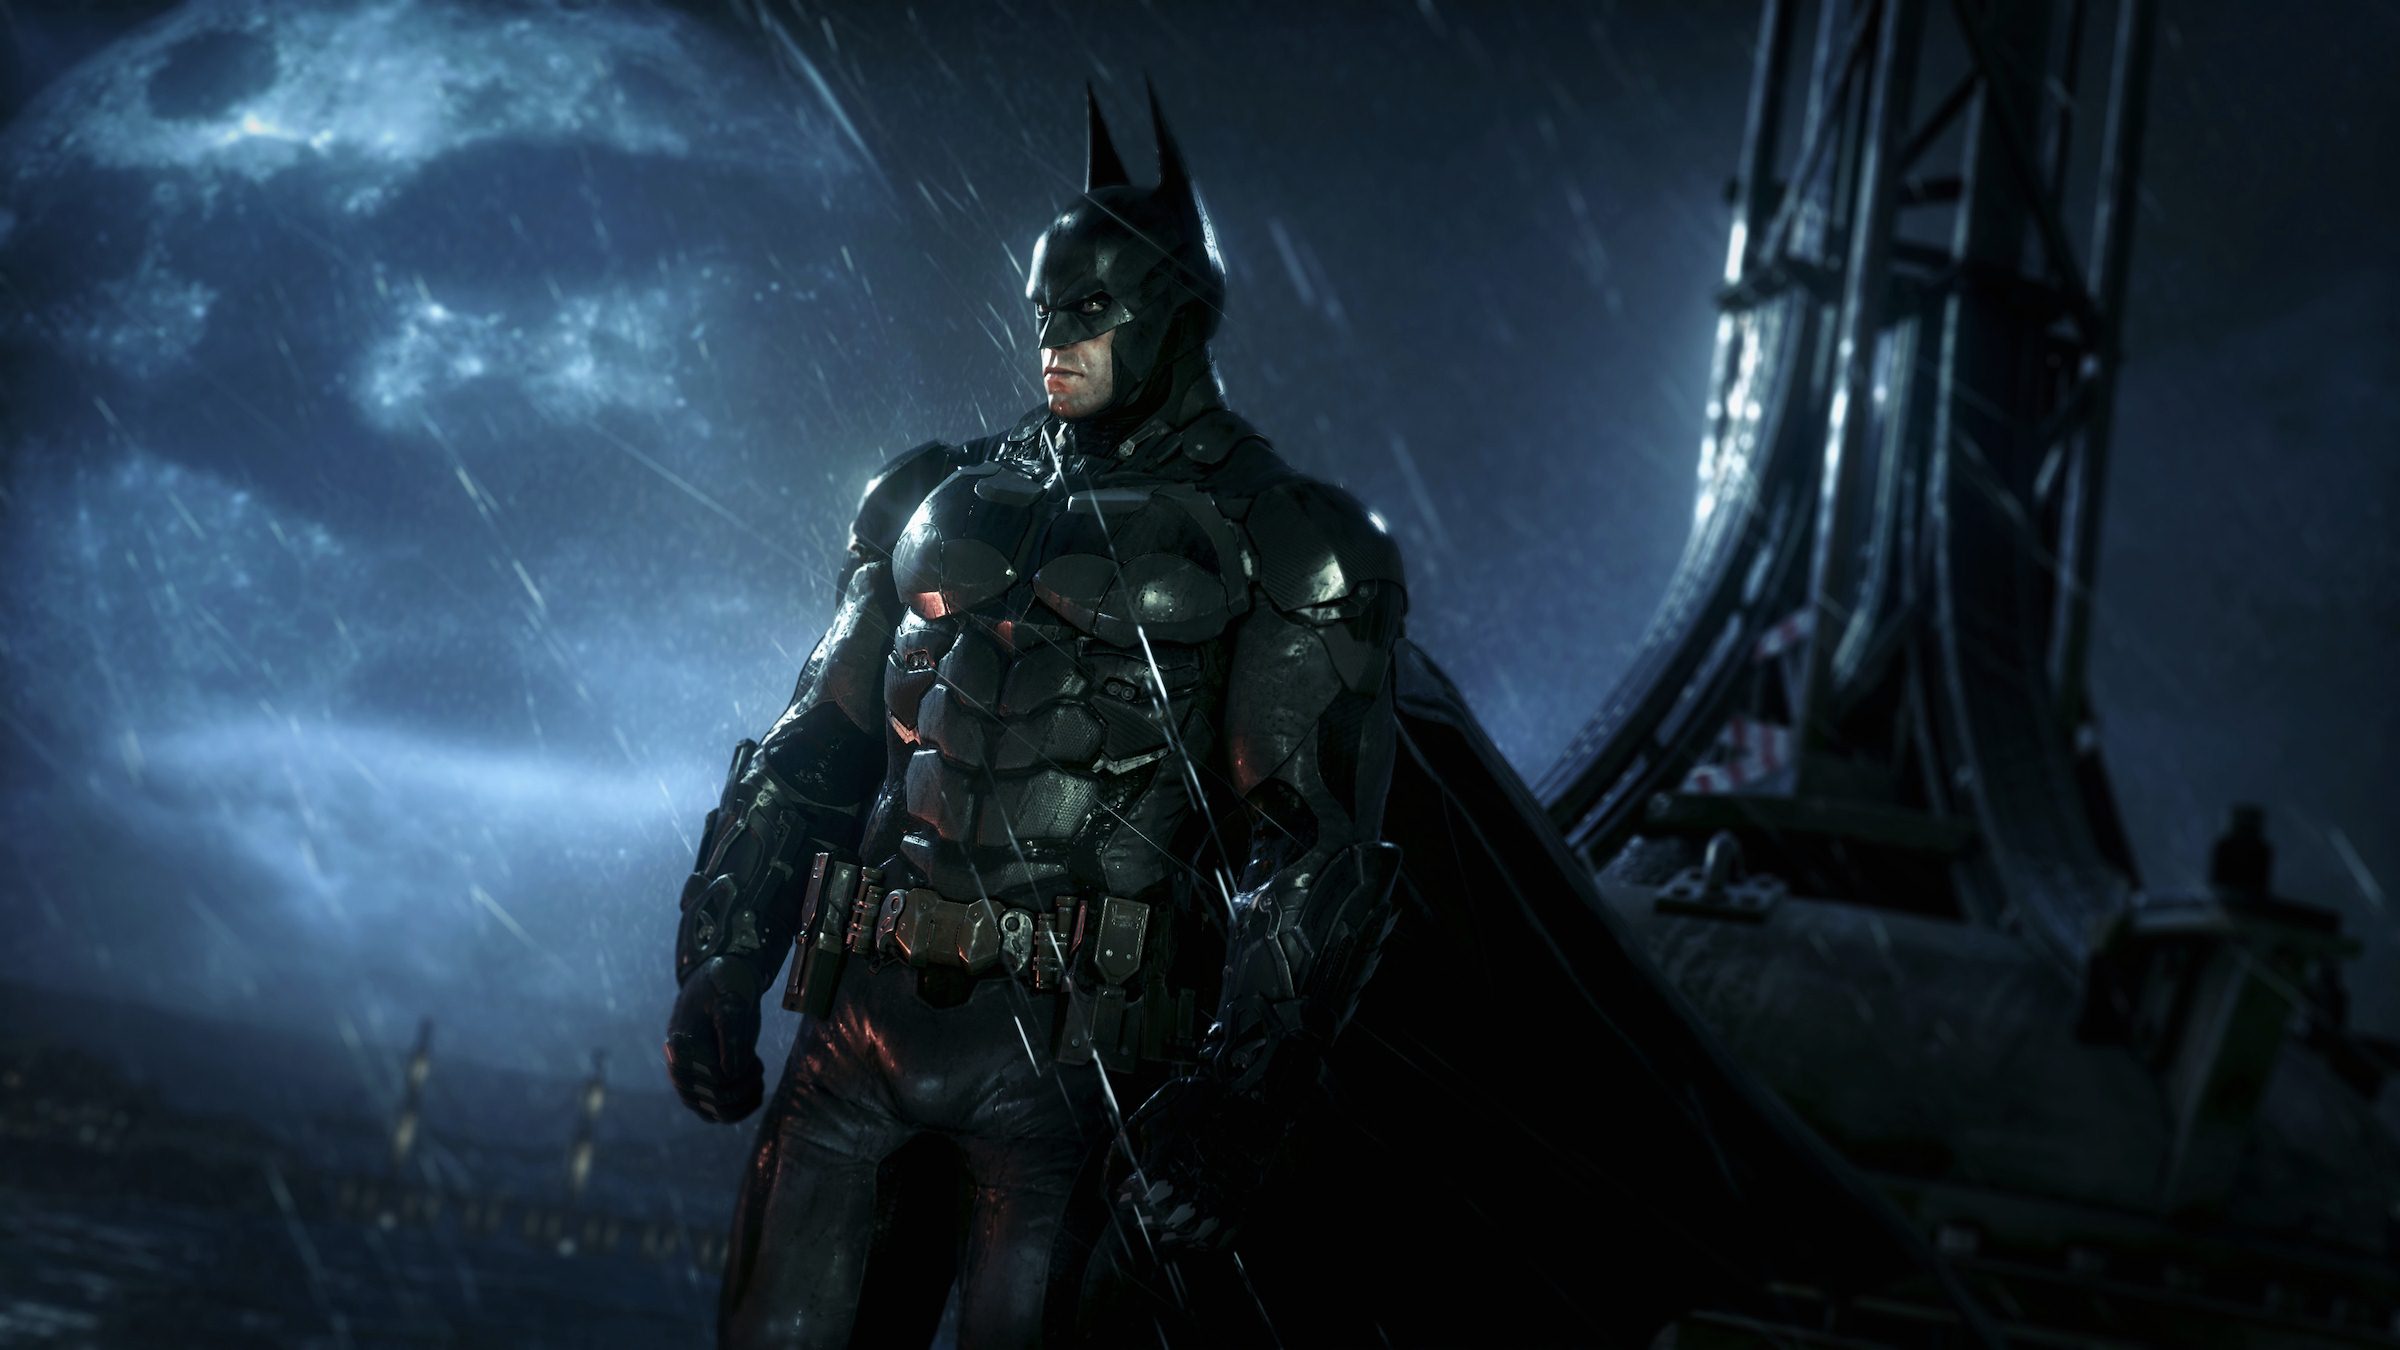 Batman Arkham Knight HD wallpapers free download